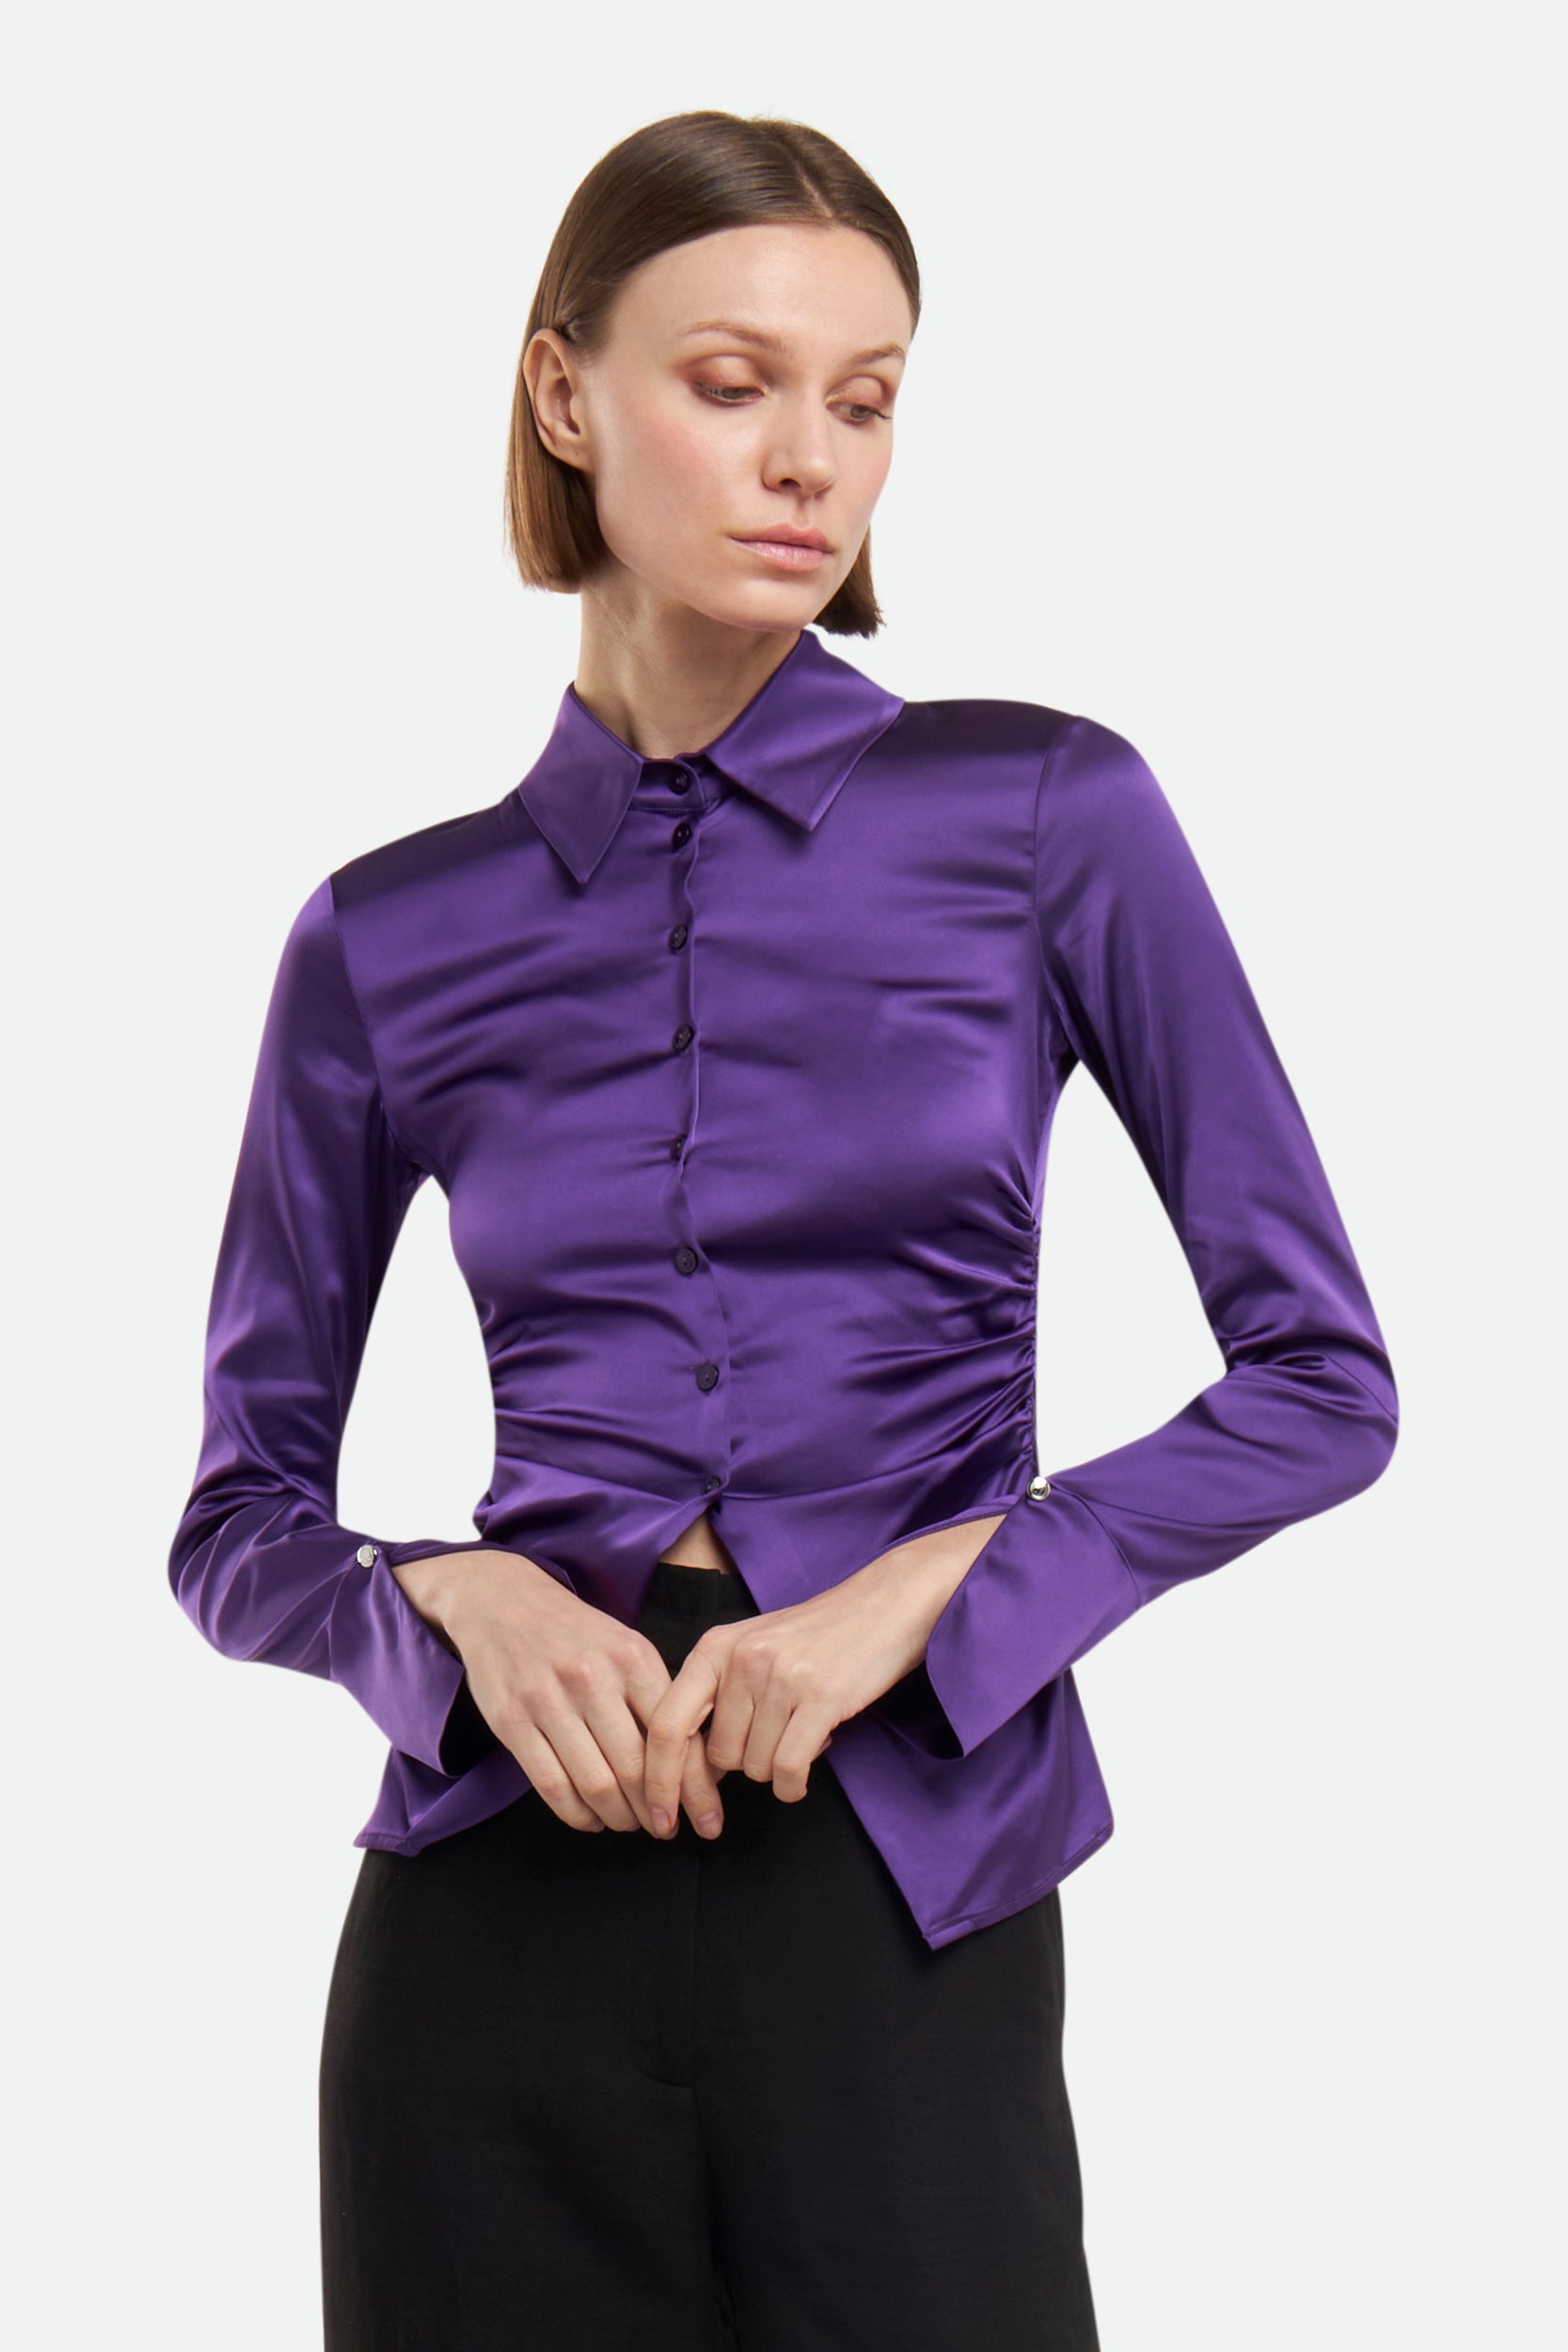 Patrizia Pepe Purple Shirt